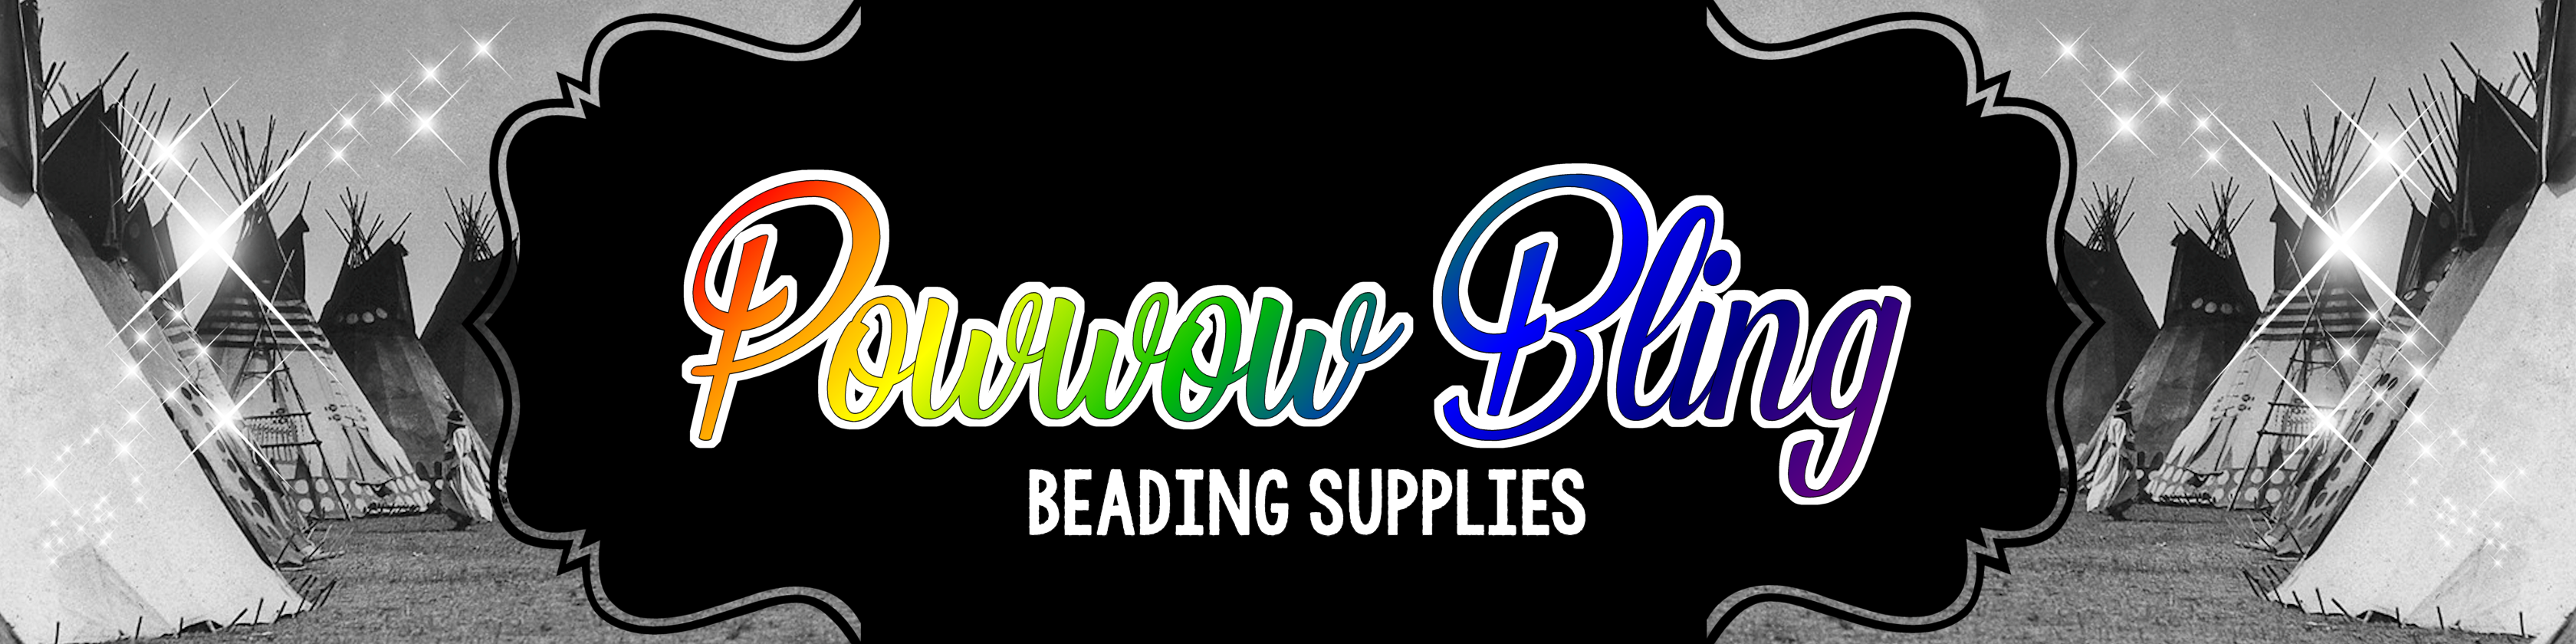 Sticky Bead Mat - Bead & Powwow Supply